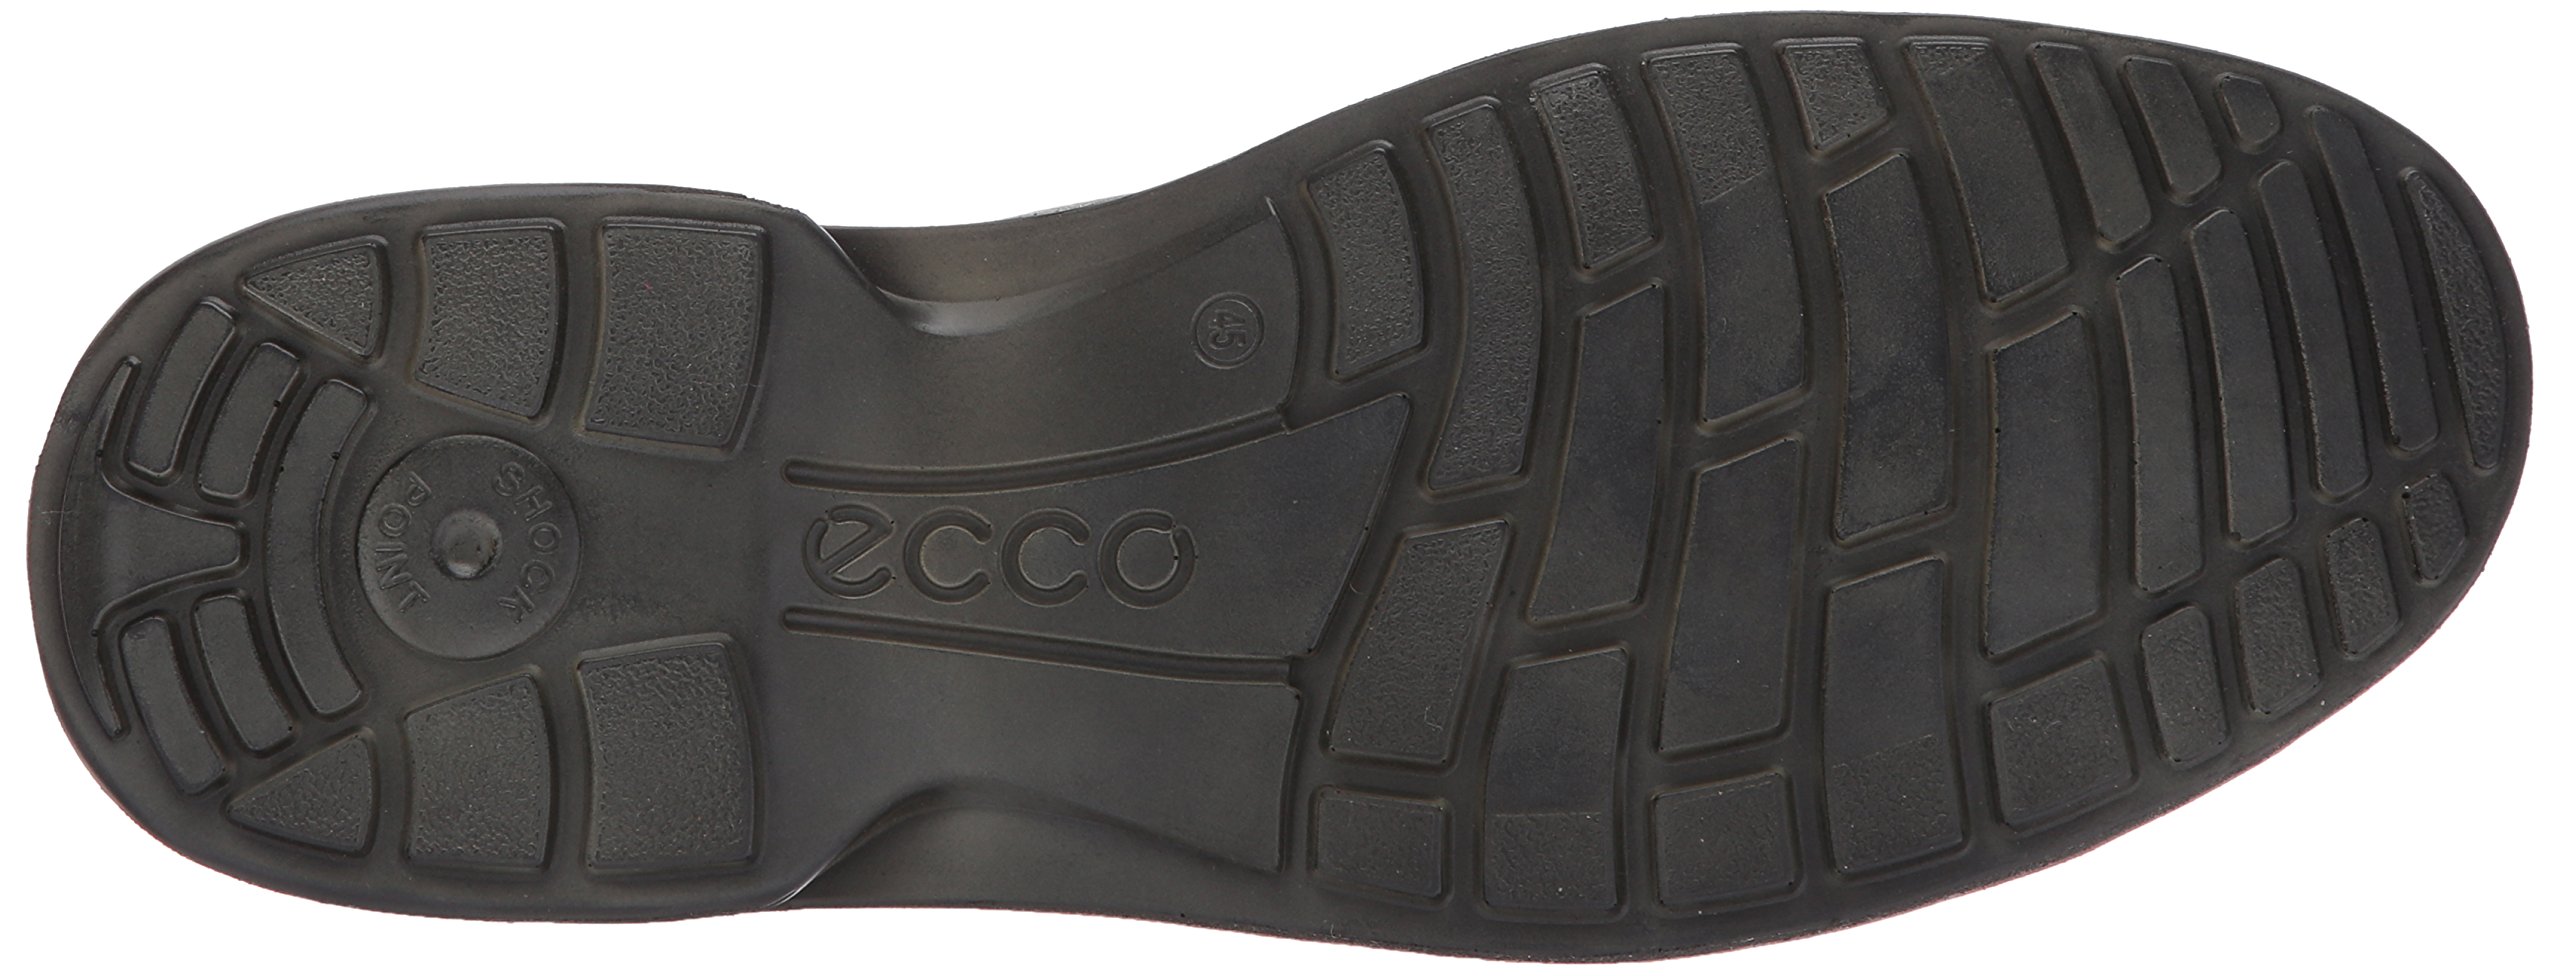 ECCO Men's Turn Gore-tex Chukka Tie Fashion Boot